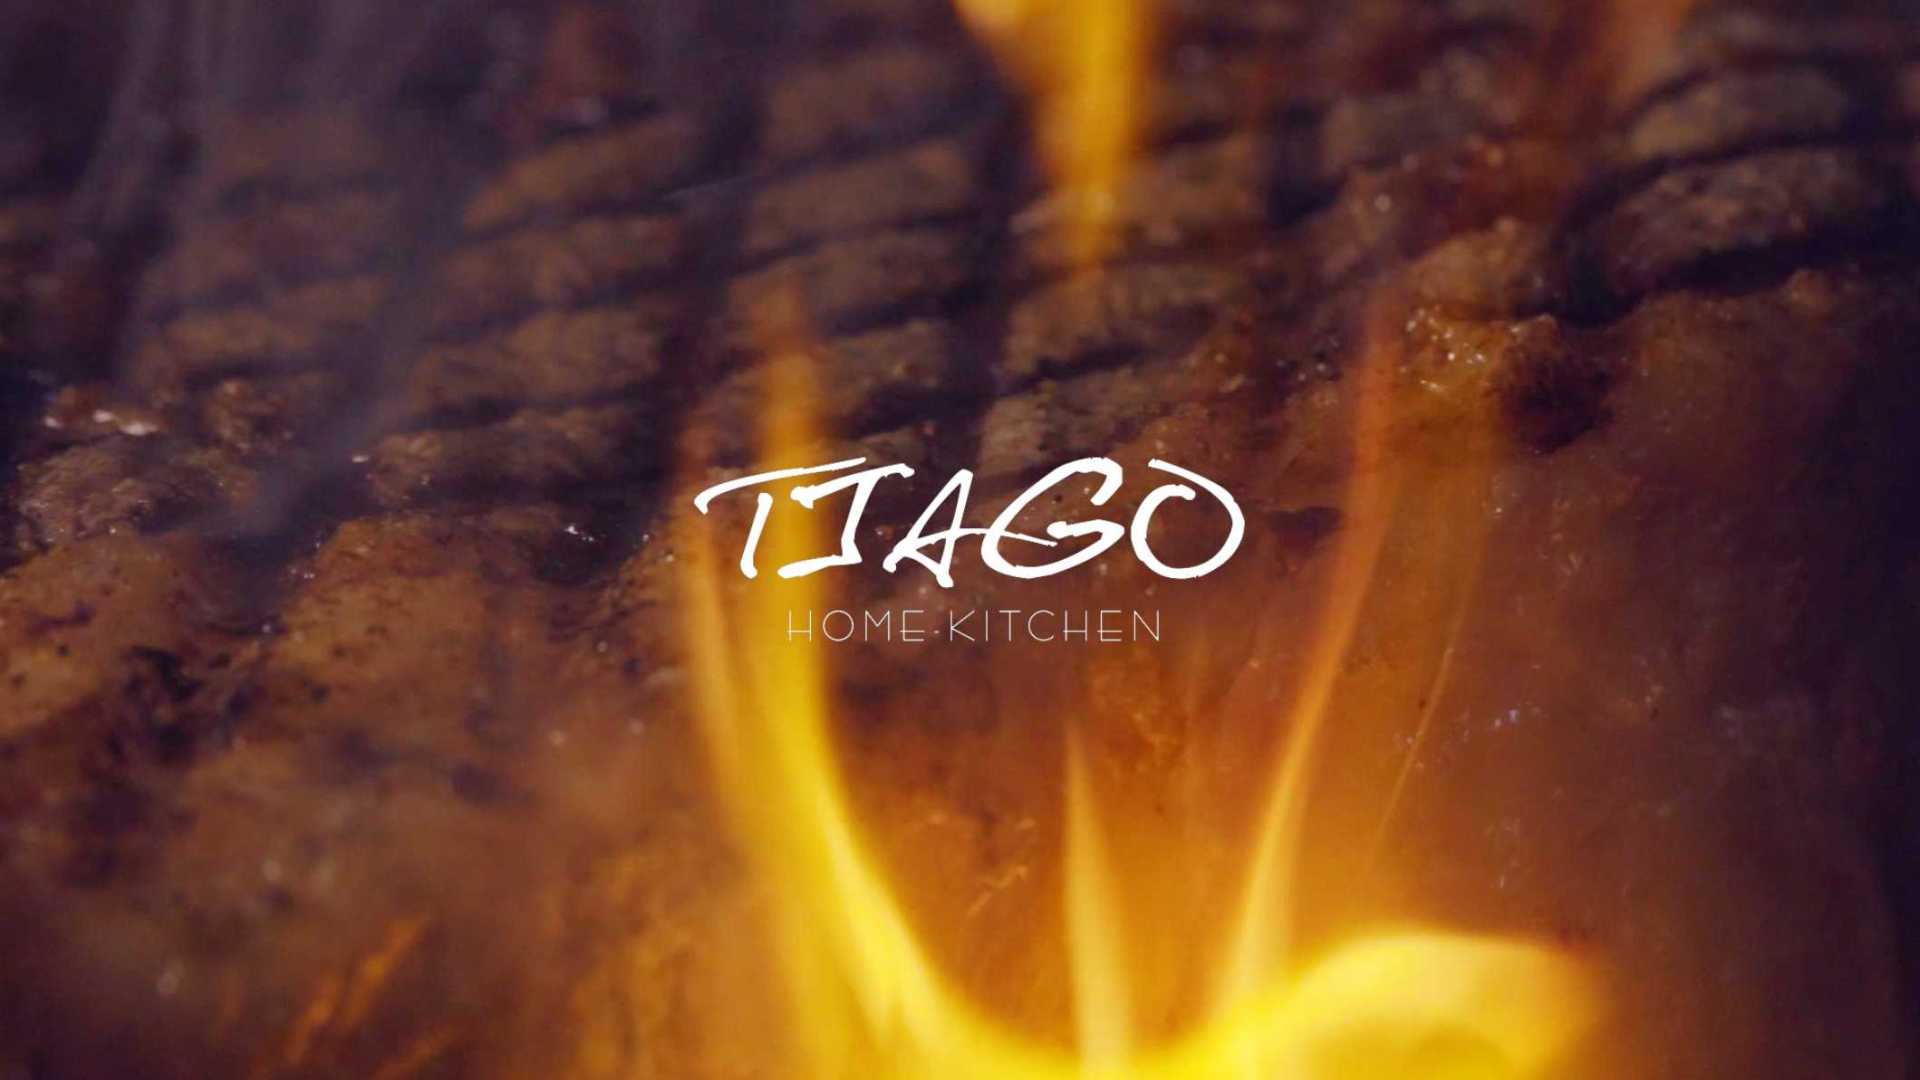 Tiago home kitchen - 创意美食